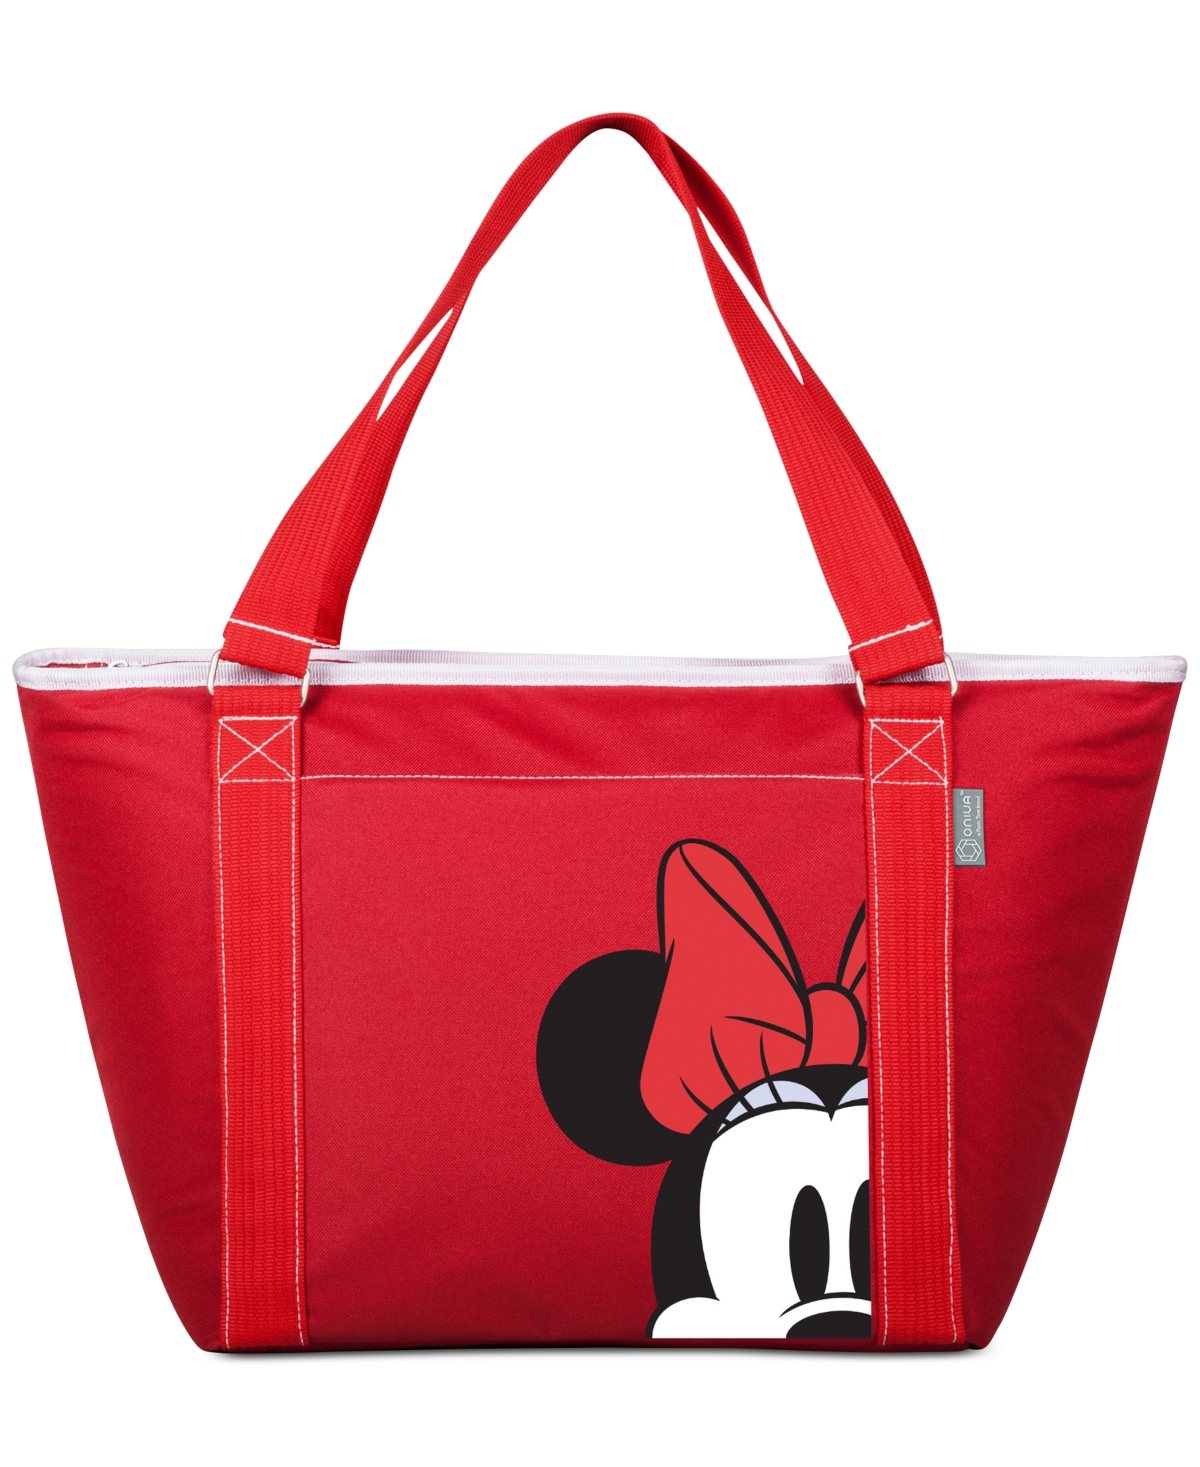 Minnie Mouse - Topanga Cooler Tote - Red